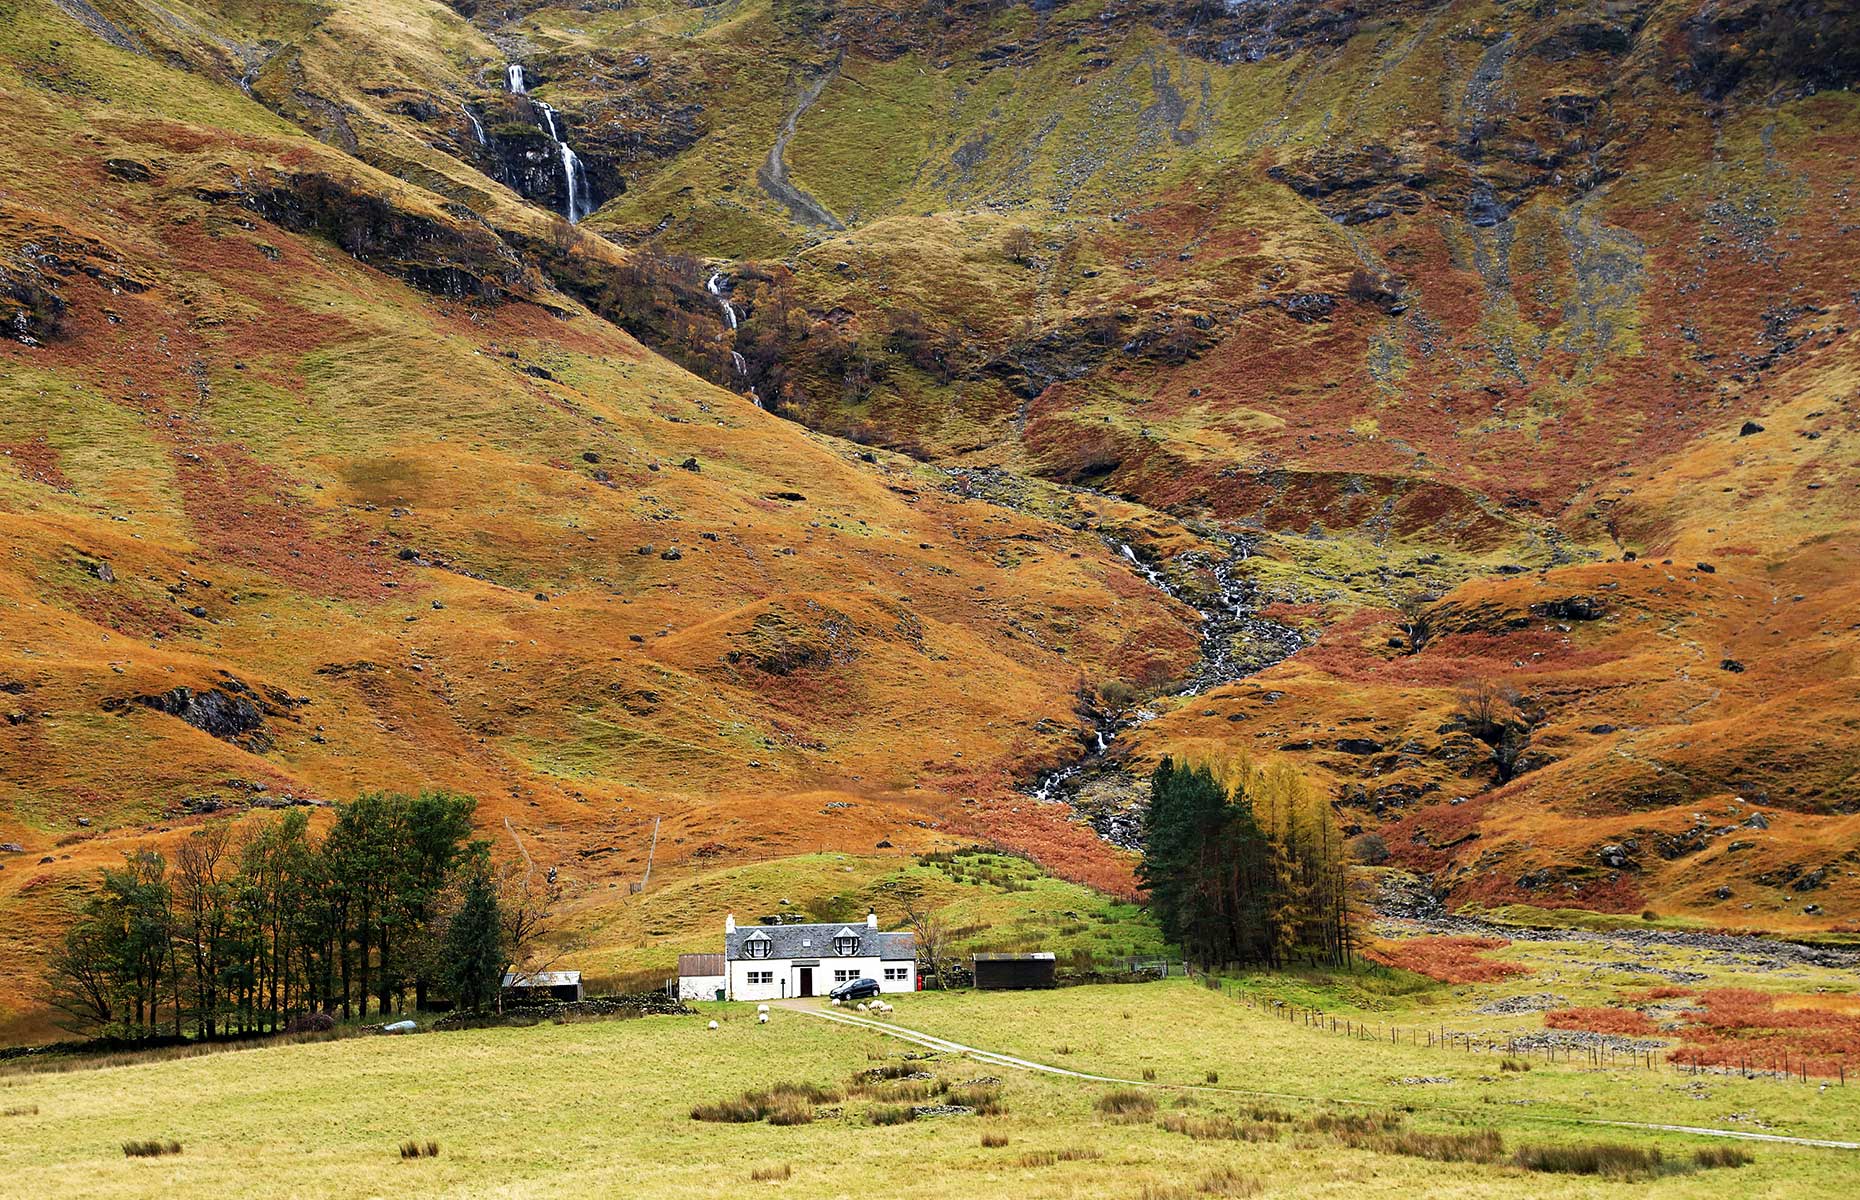 Orkney Islands, Scotland during autumn (Image: mikadun/Shutterstock)